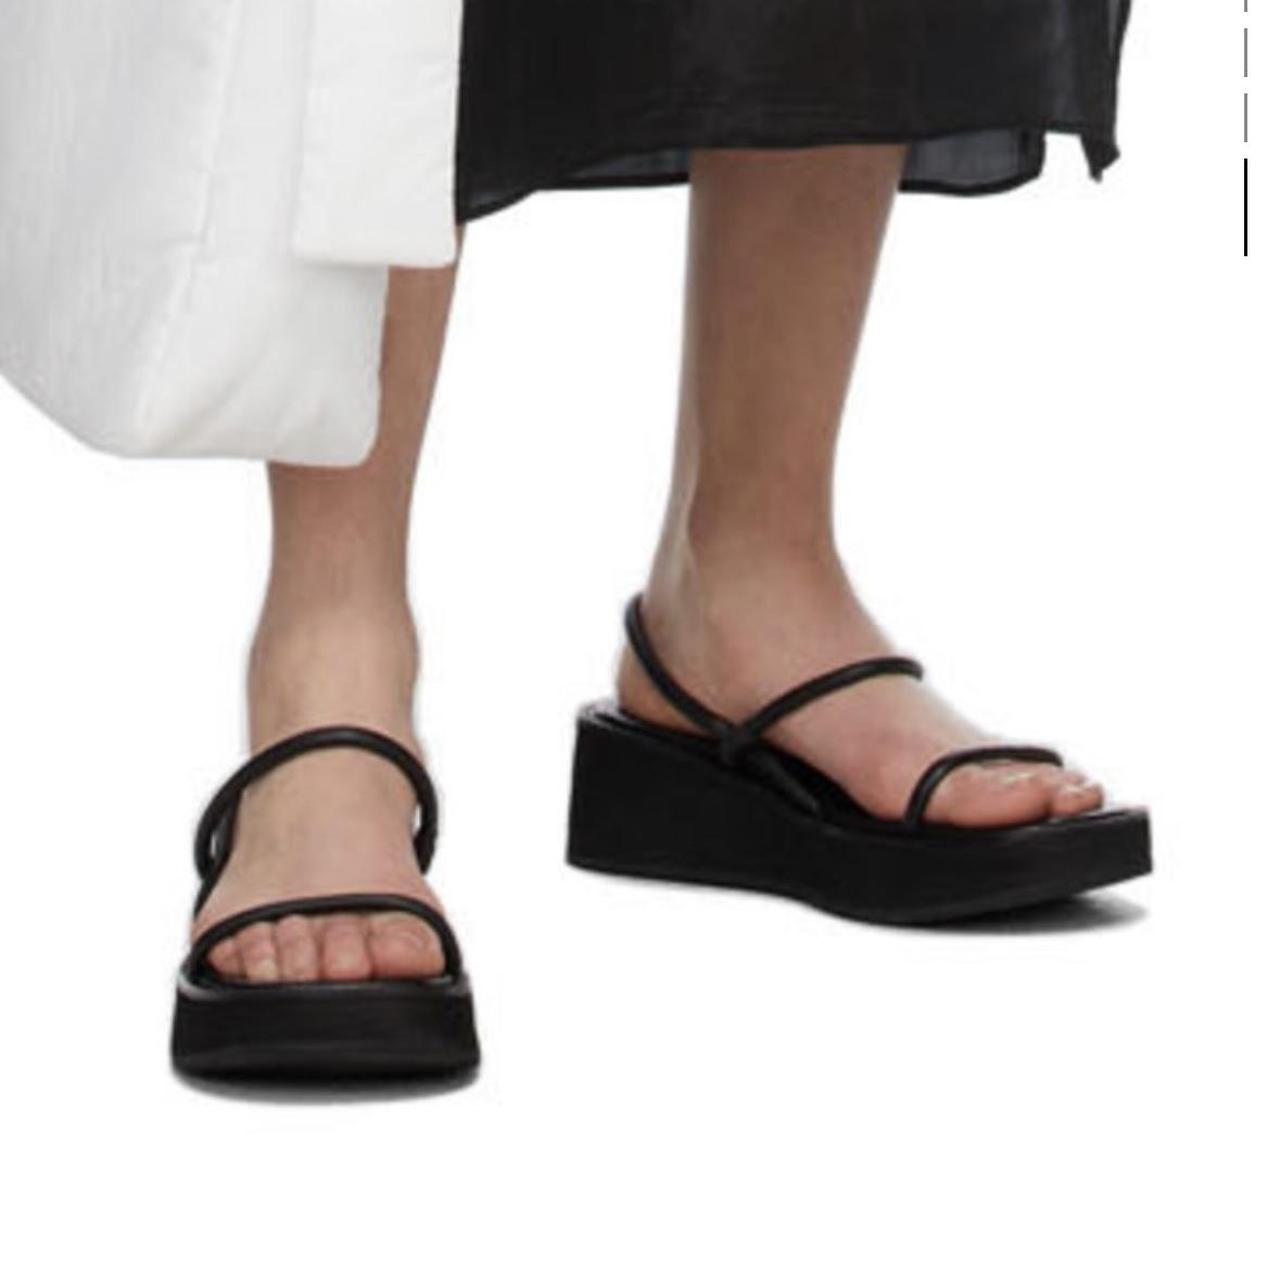 AMOMENTO Black String Sandals | Size 37, Buffed...